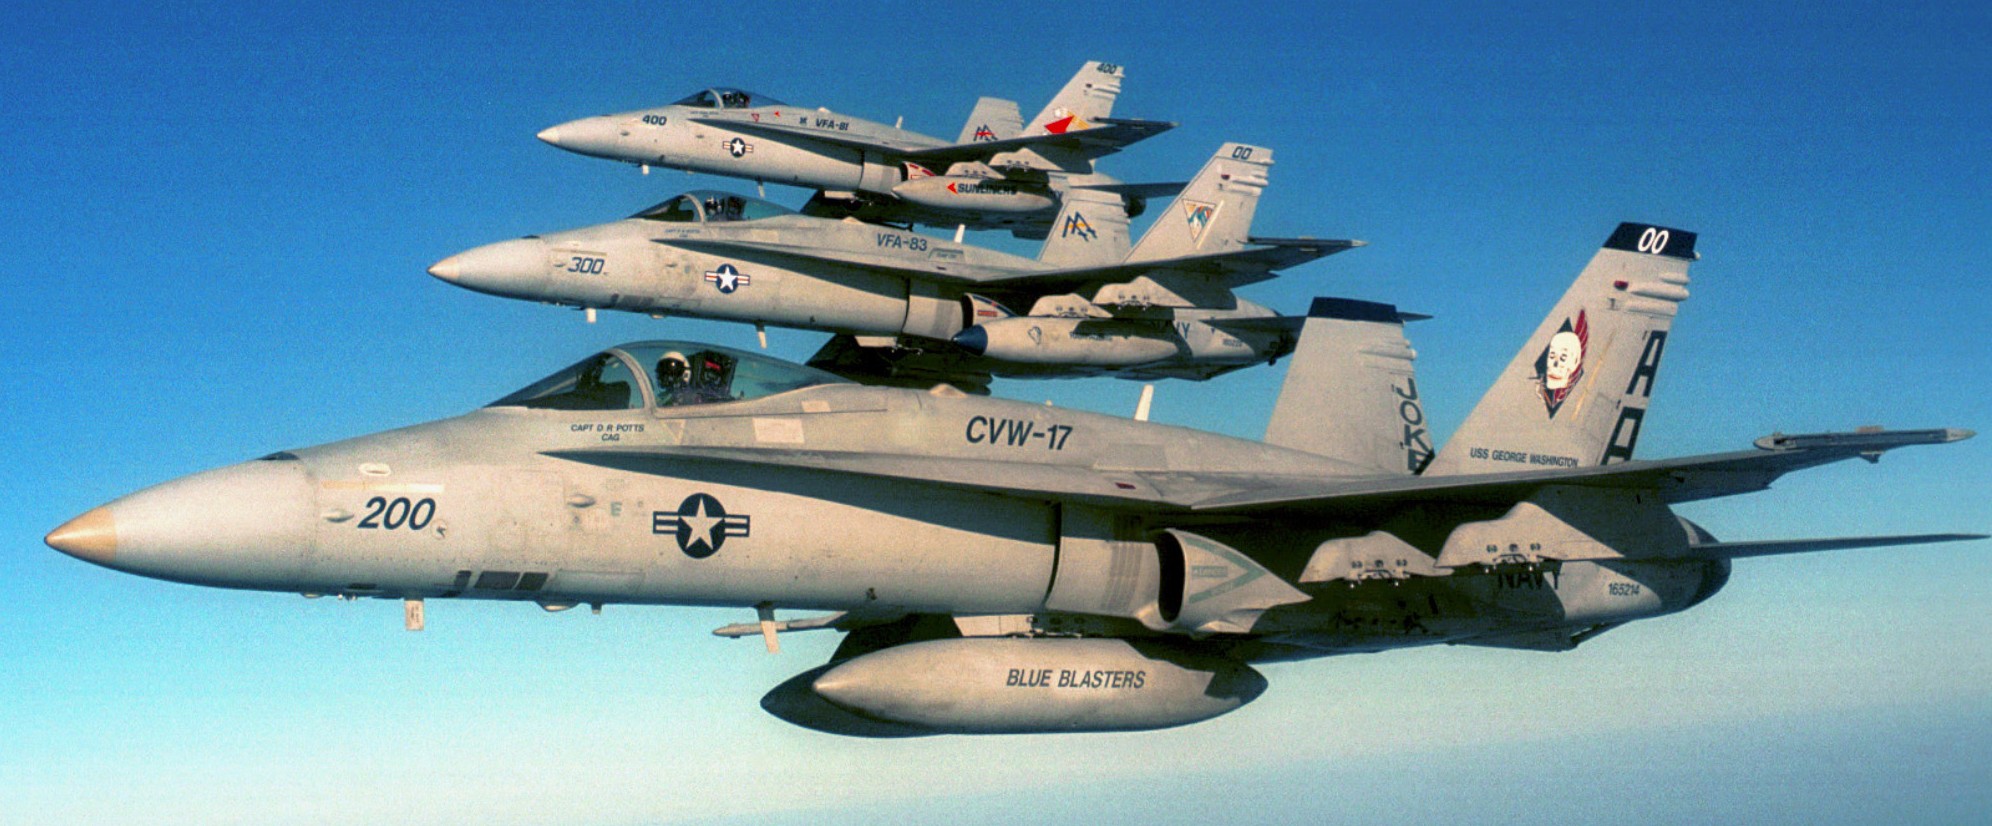 vfa-34 blue blasters strike fighter squadron f/a-18c hornet cvn-73 uss george washington cvw-17 us navy 126p